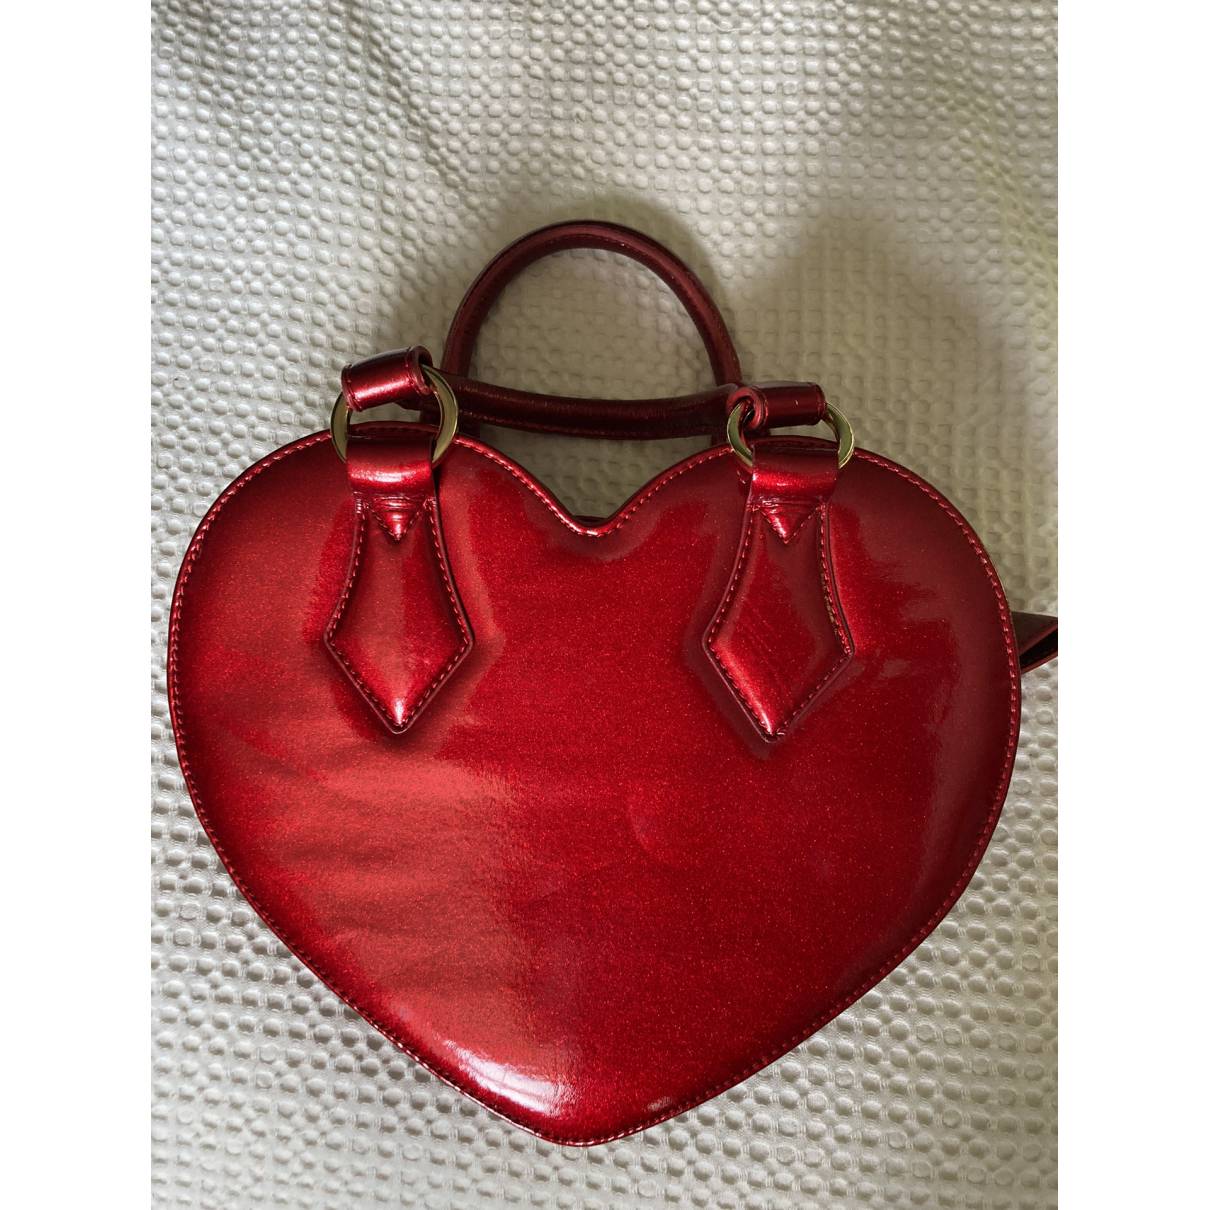 westwood heart shaped